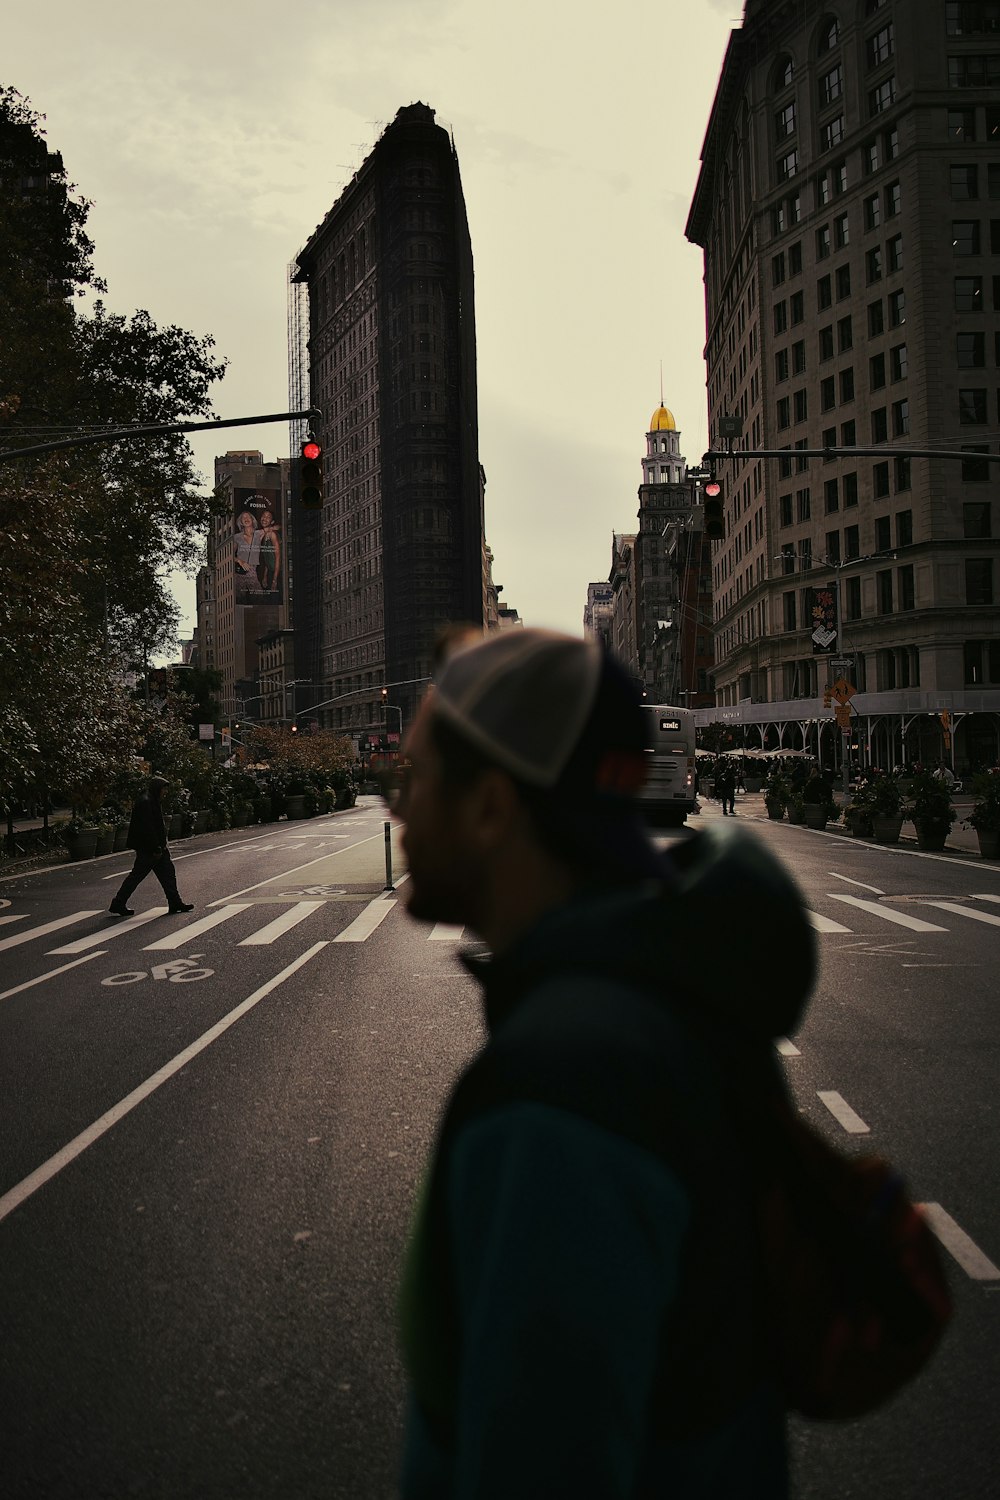 a man walking across a street next to tall buildings